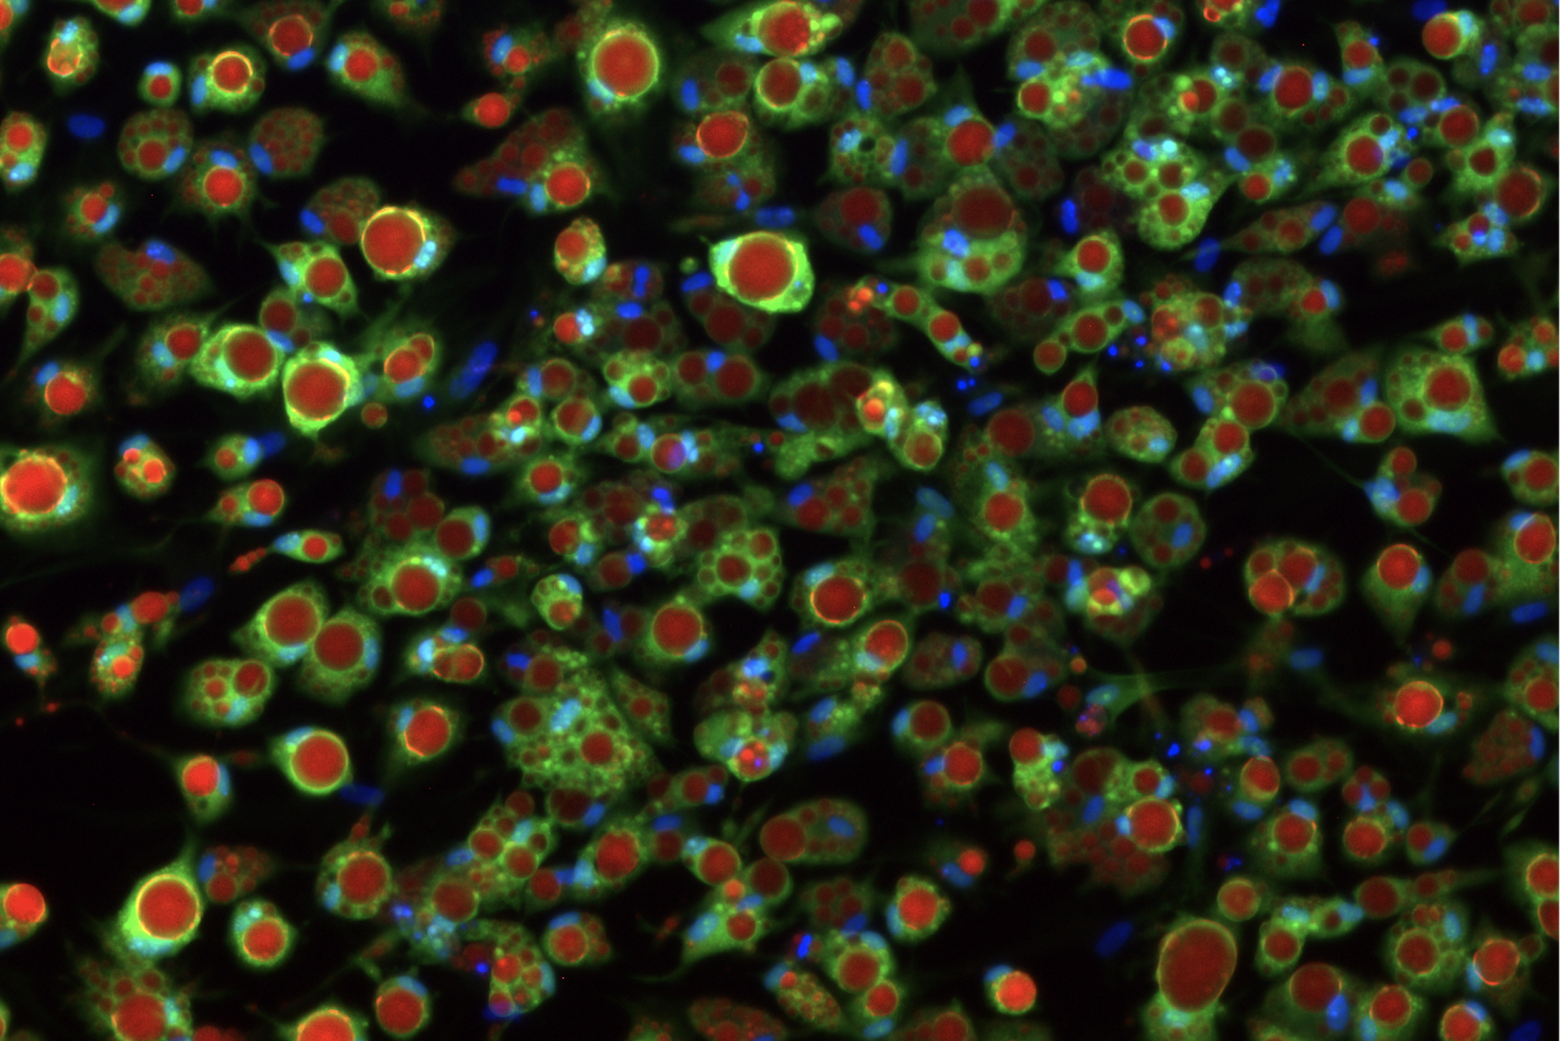 Lab-grown fat cells help scientists understand type 2 diabetes